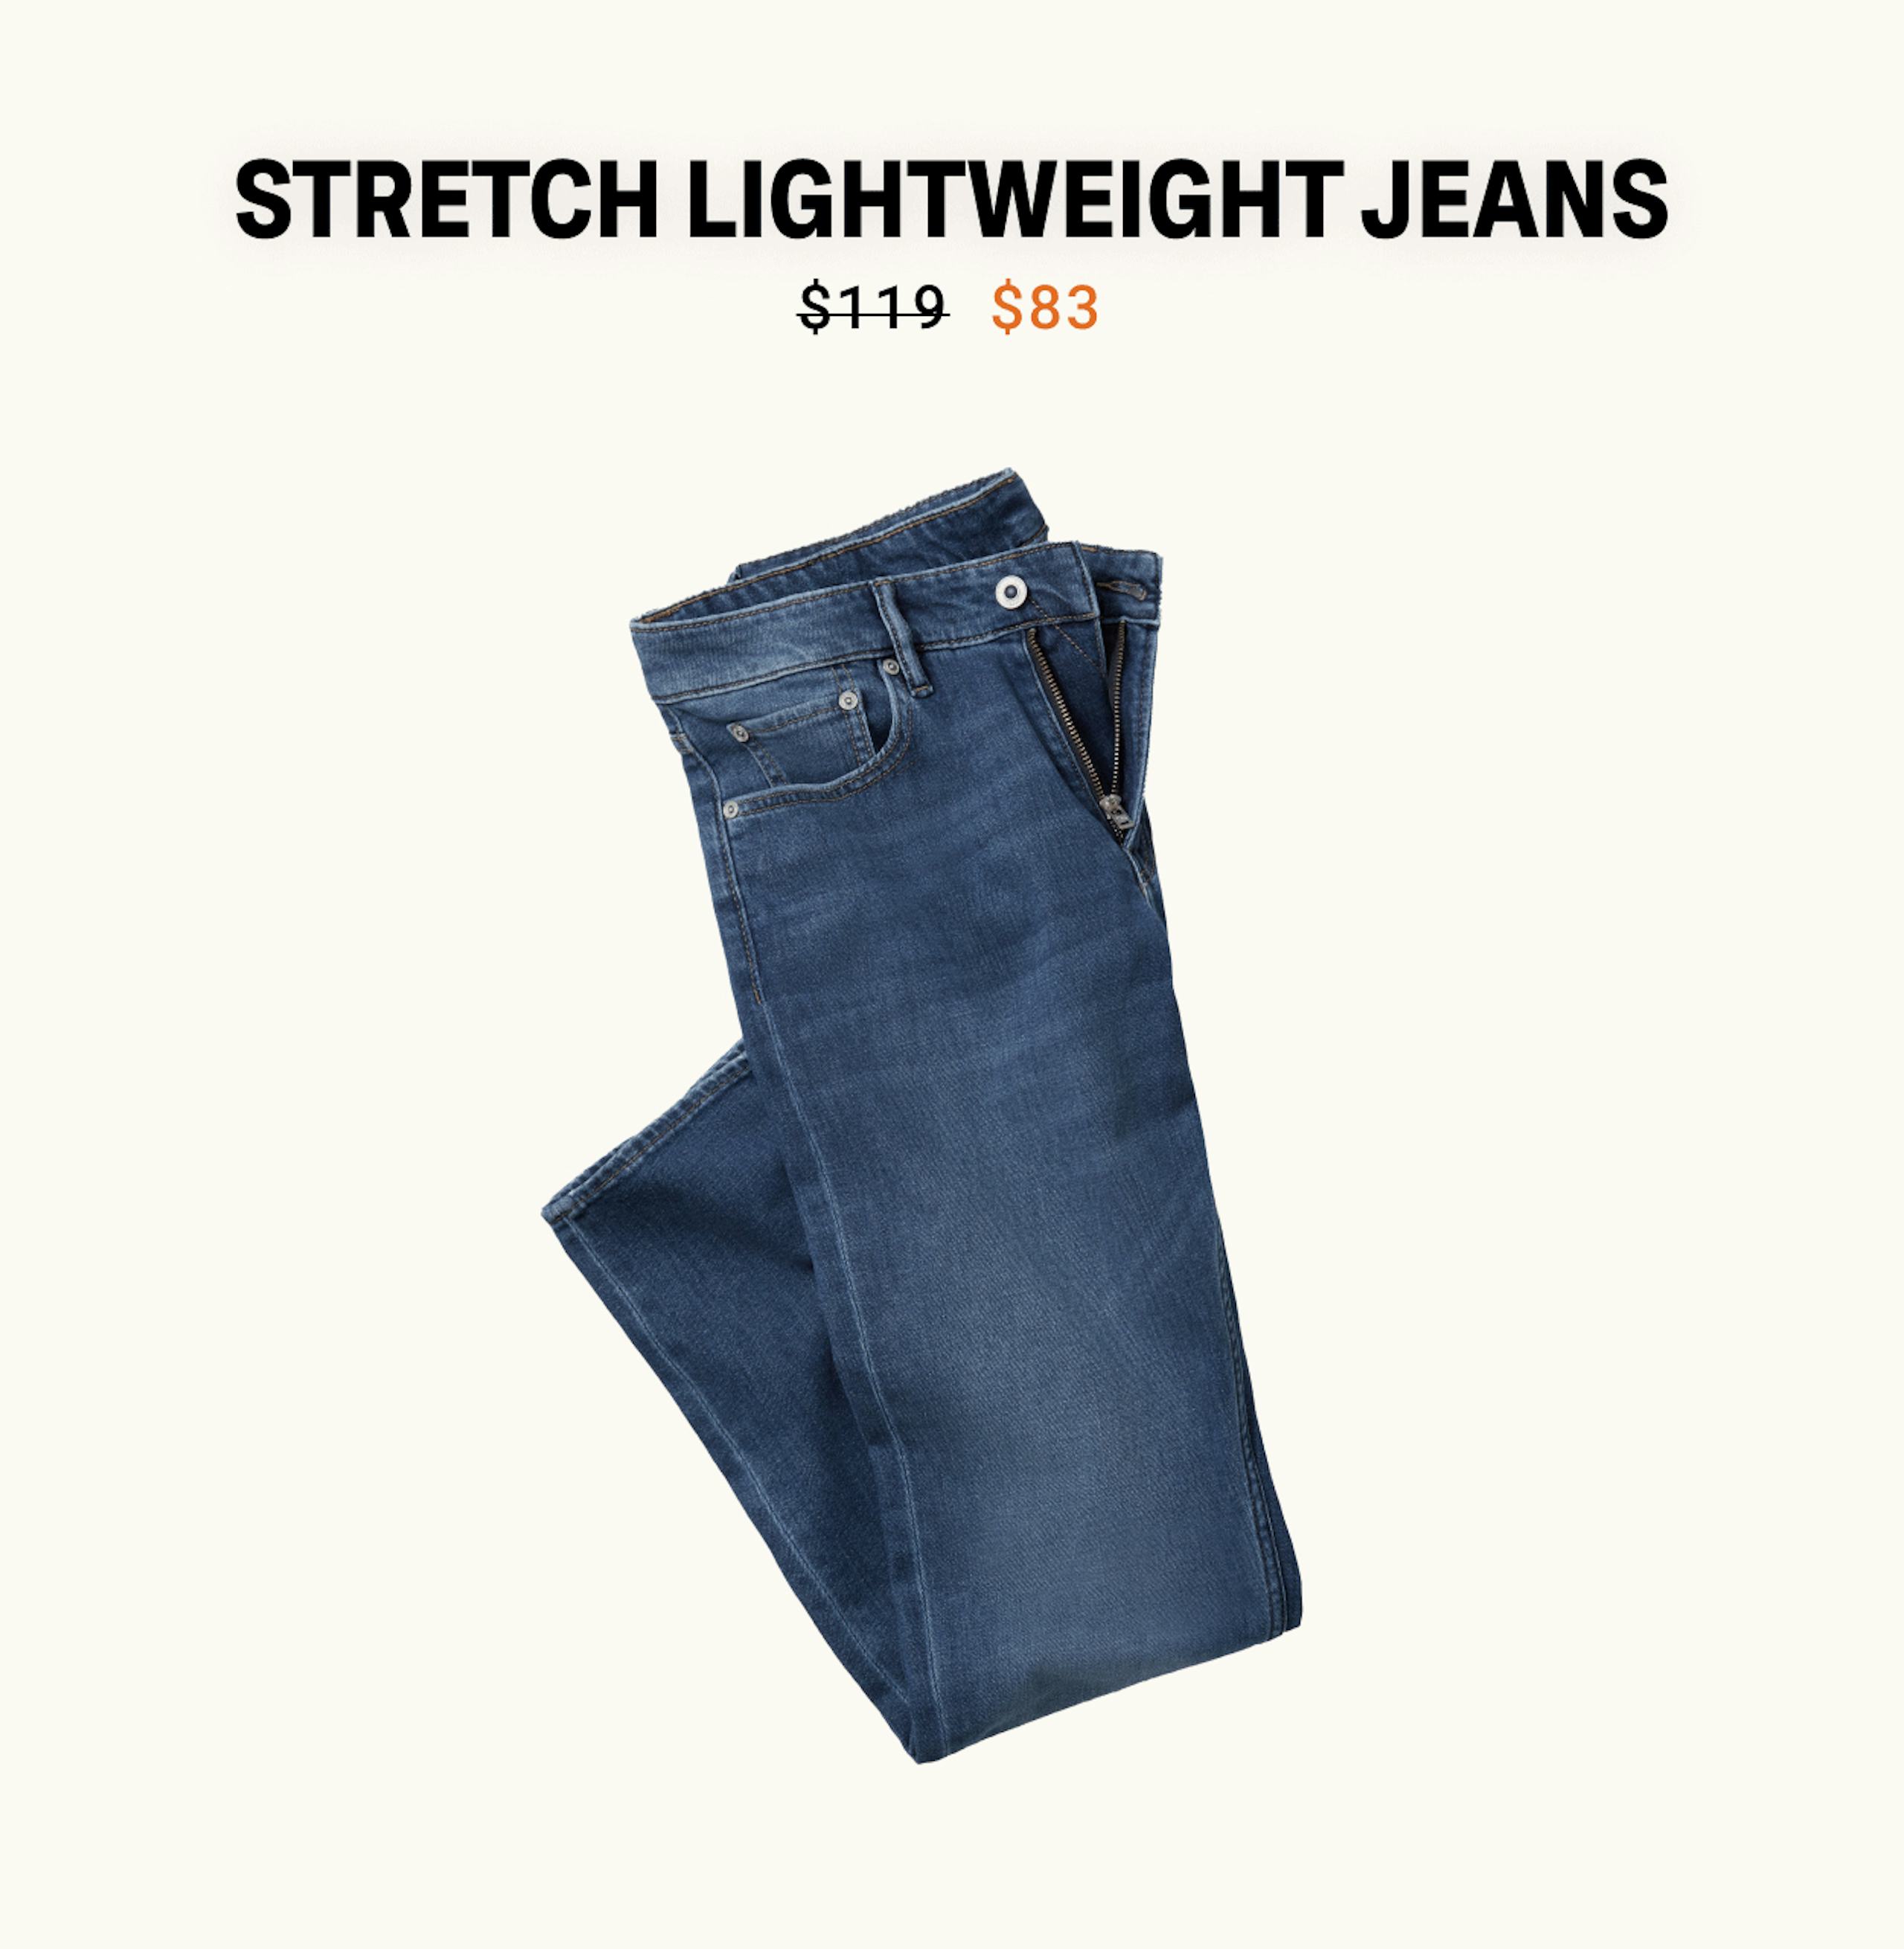 Stretch Lightweight Jeans $83